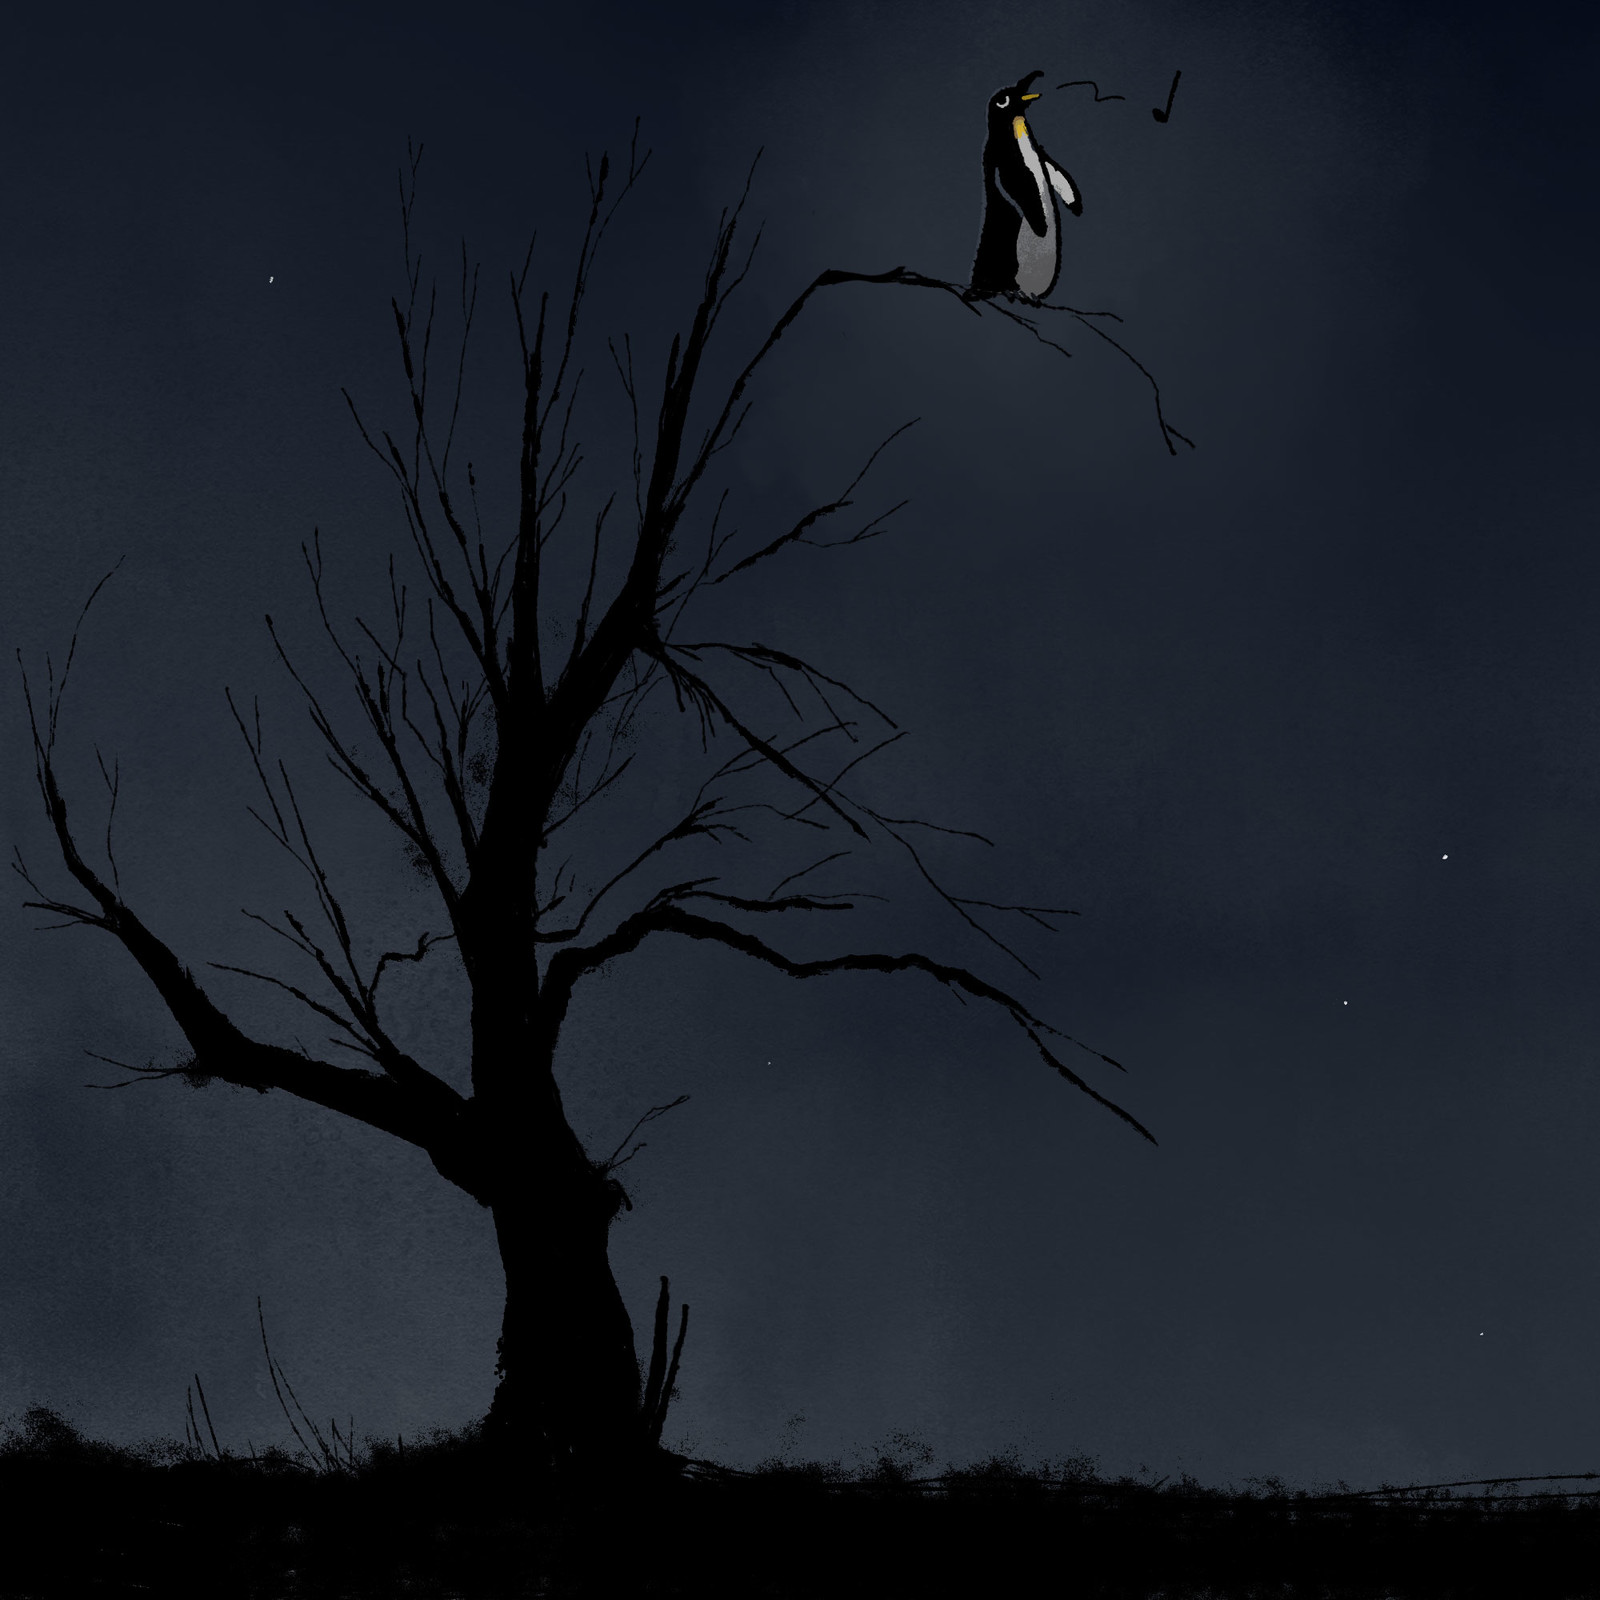 Blackbird singing in the dead of night...